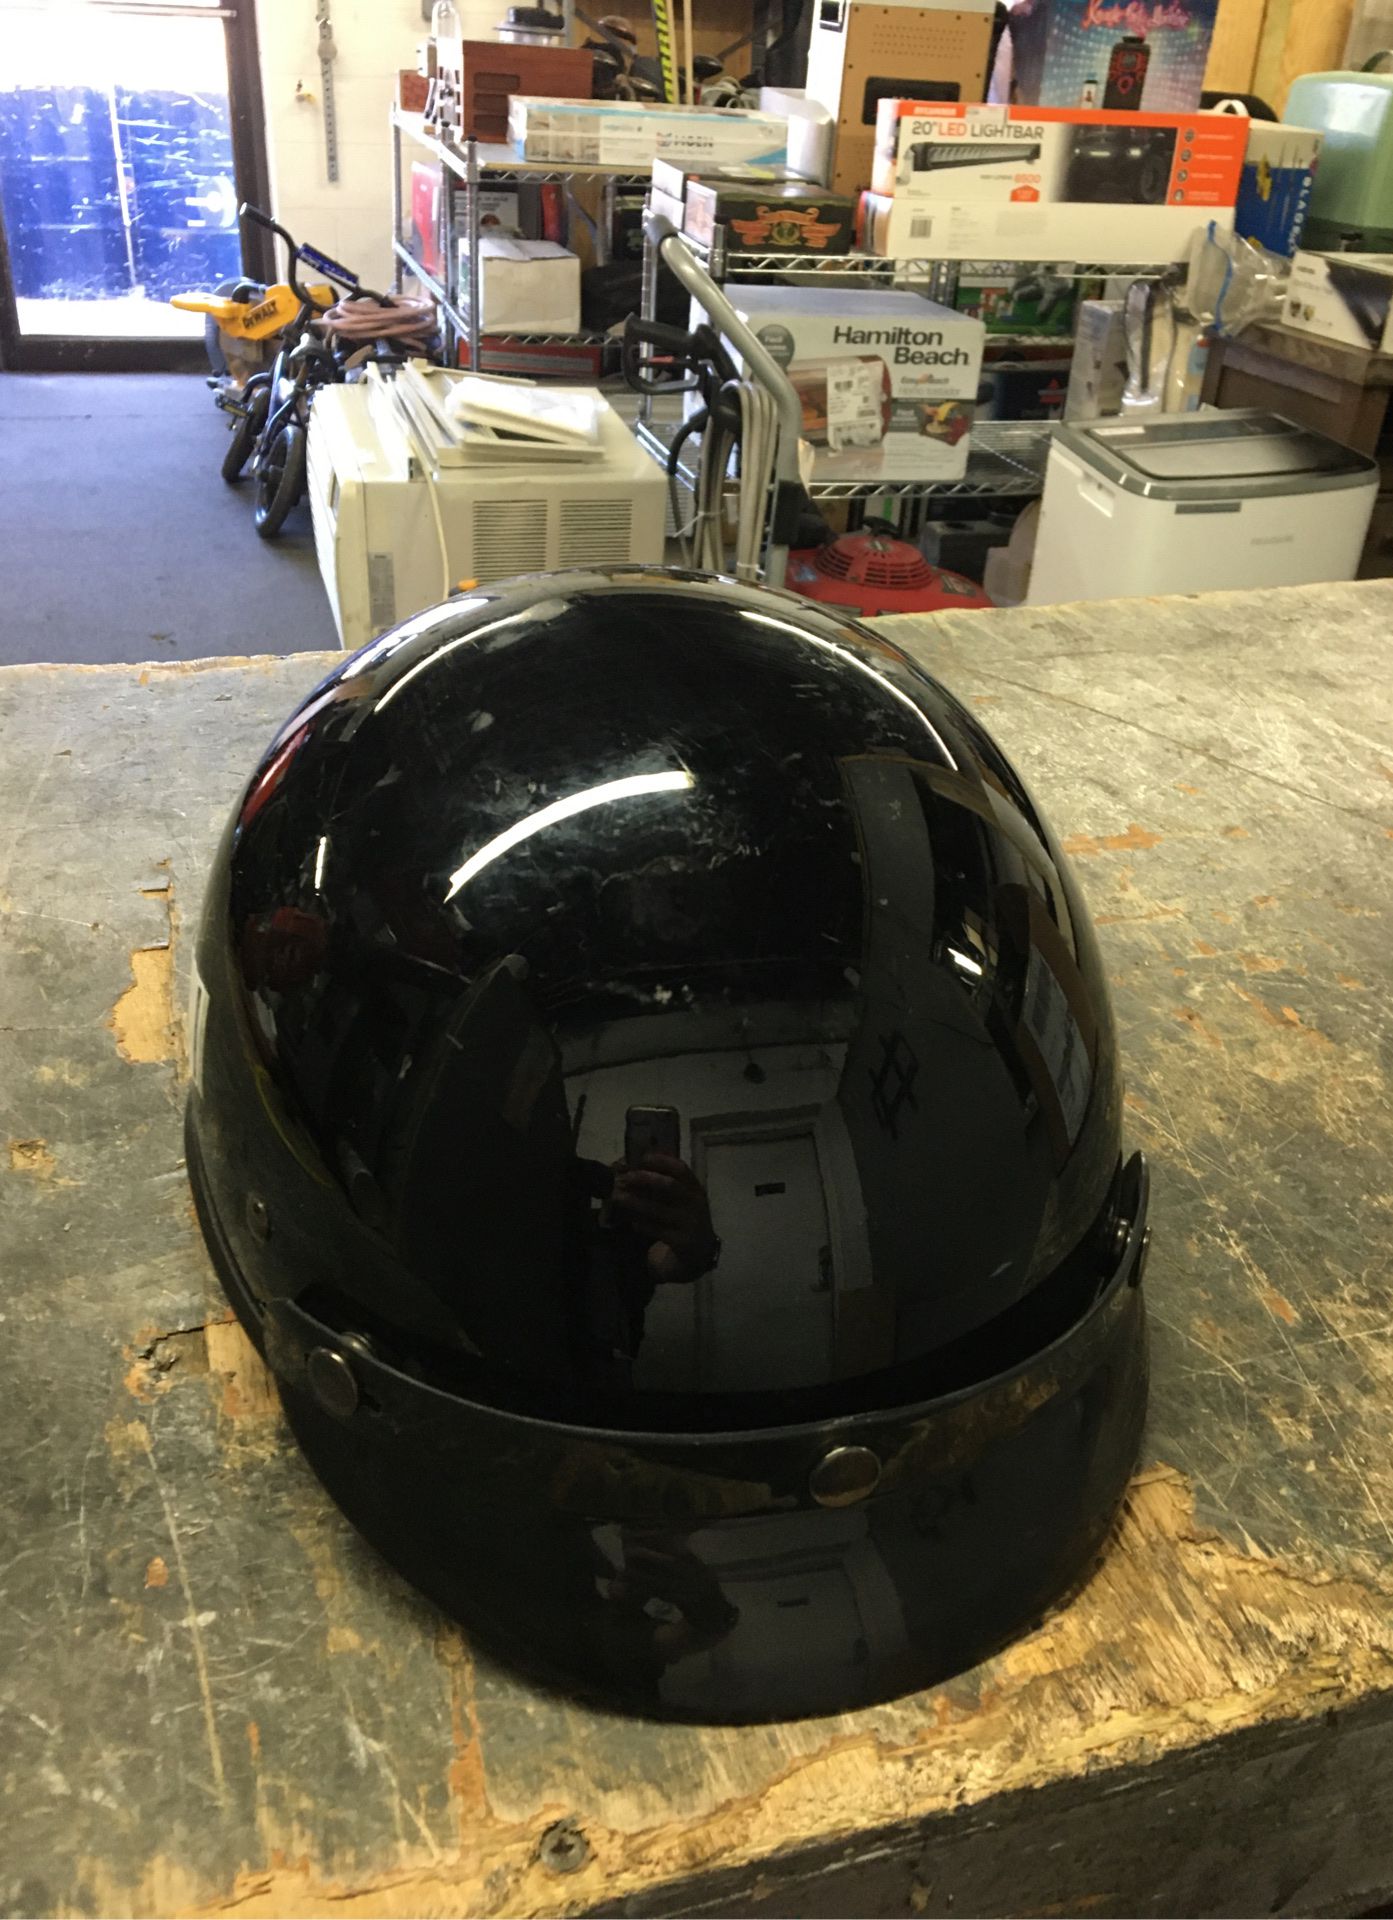 Fulmer Ranger Motorcycle helmet. Size Medium